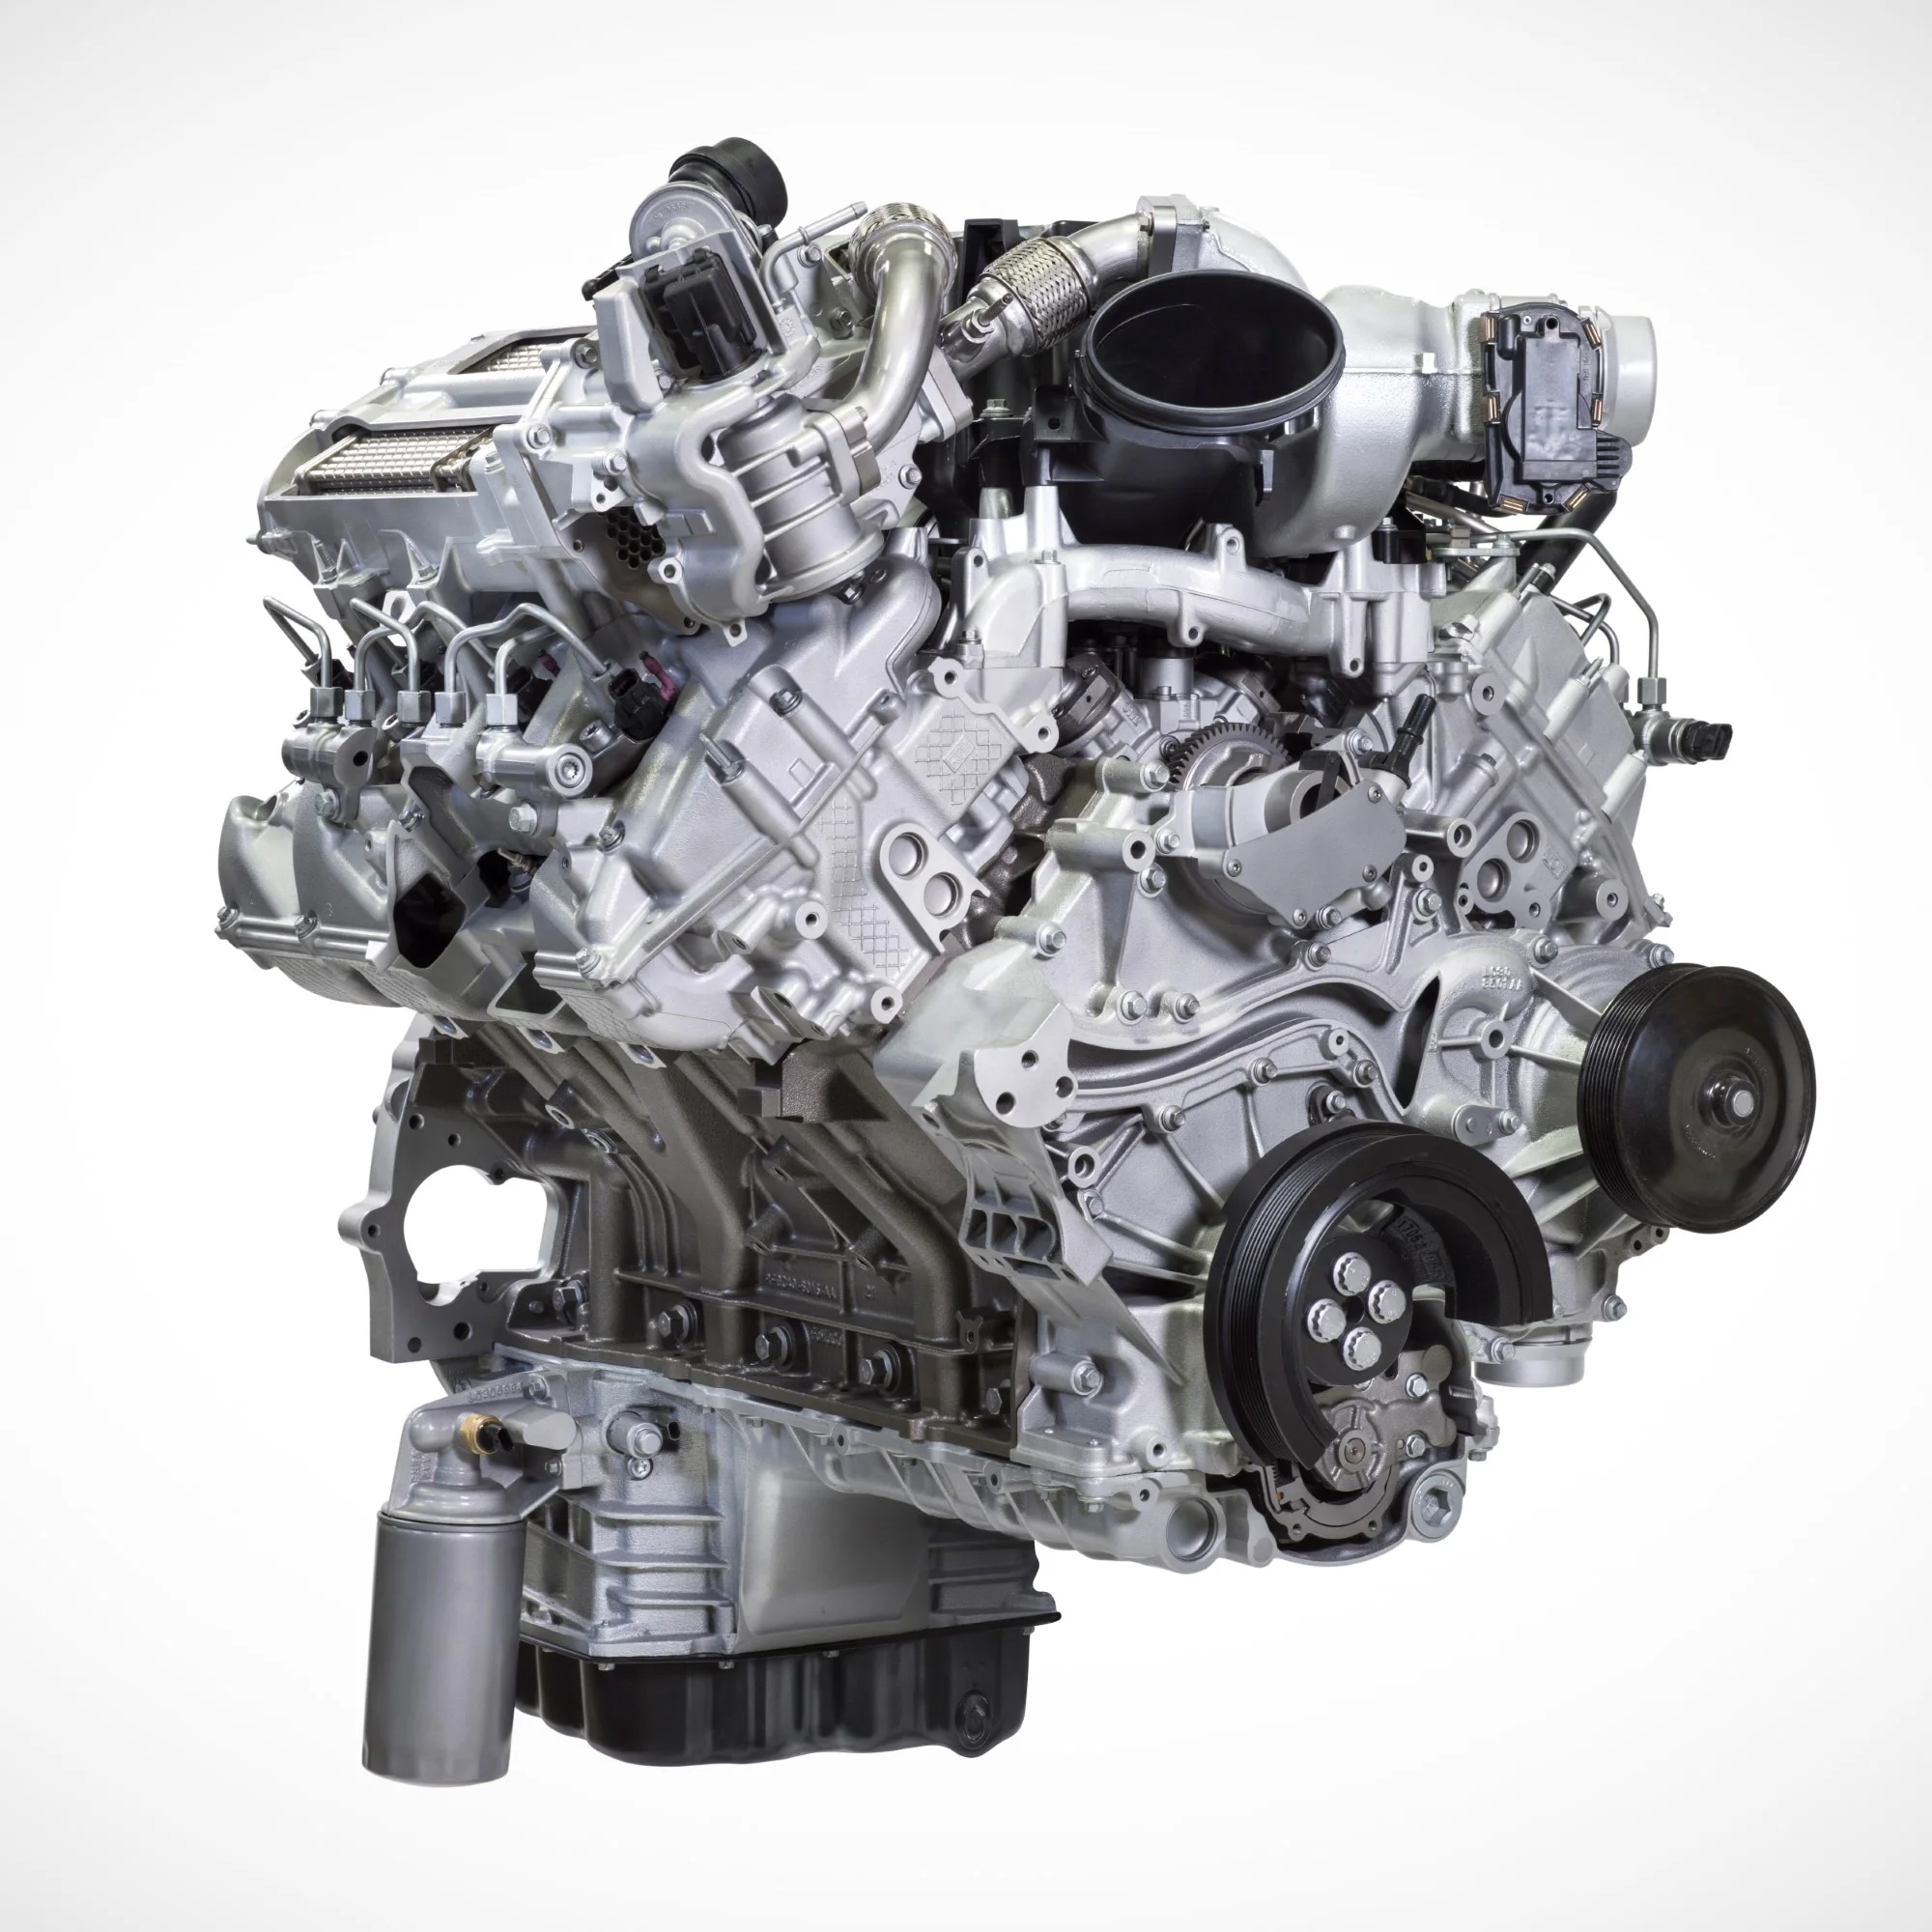 Ford 6.7L Power Stroke Scorpion Engine Info, Power, Specs, Wiki